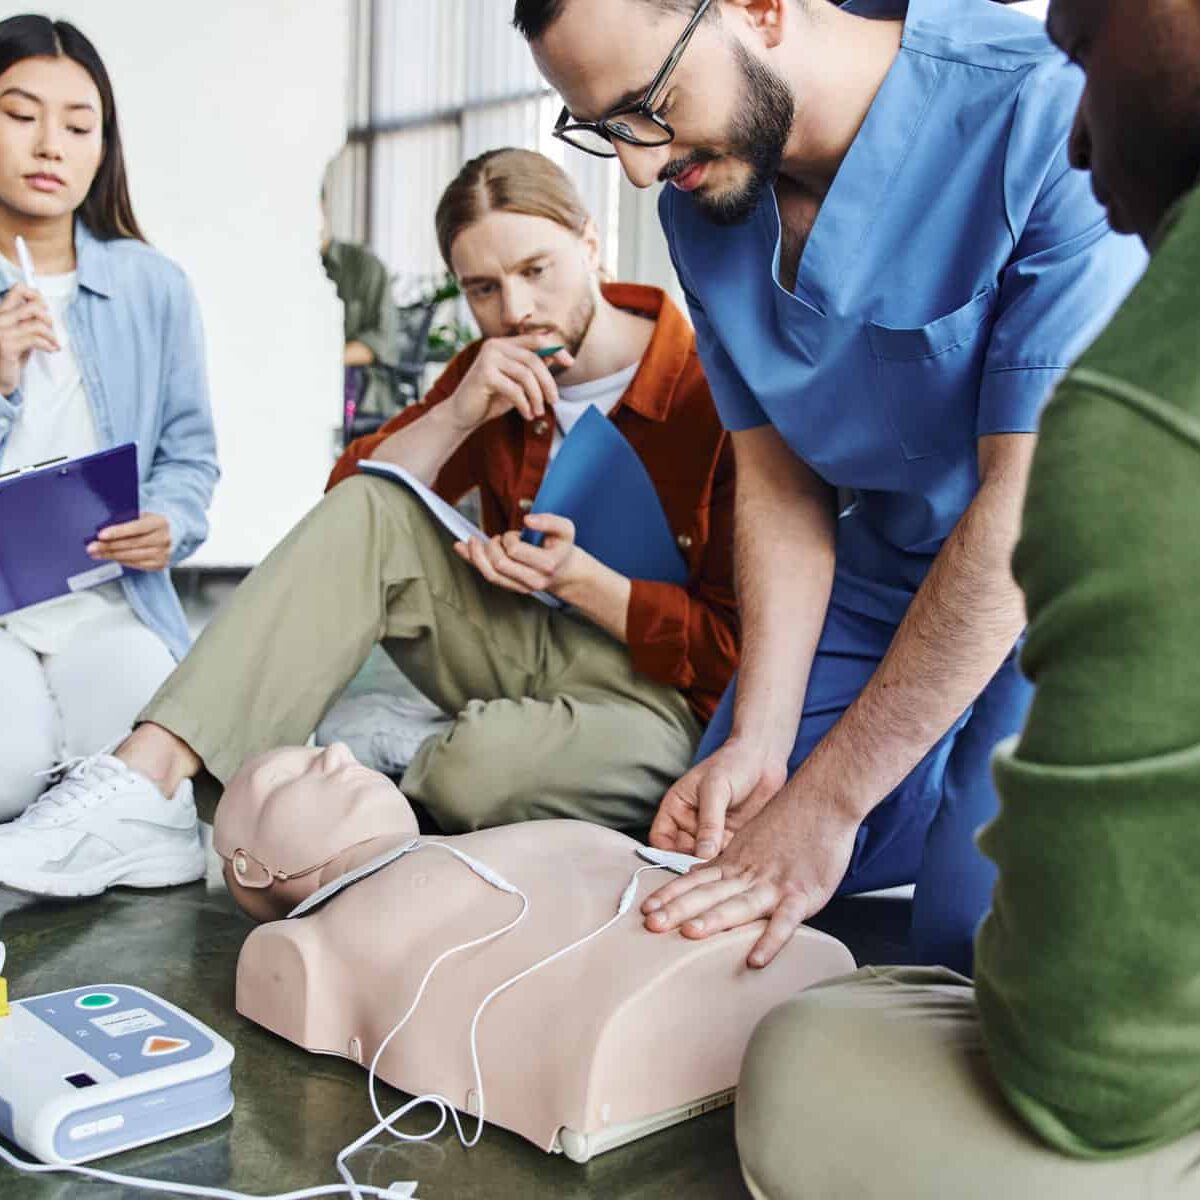 first aid seminar, medical instructor applying defibrillator pads on CPR manikin near multiethnic